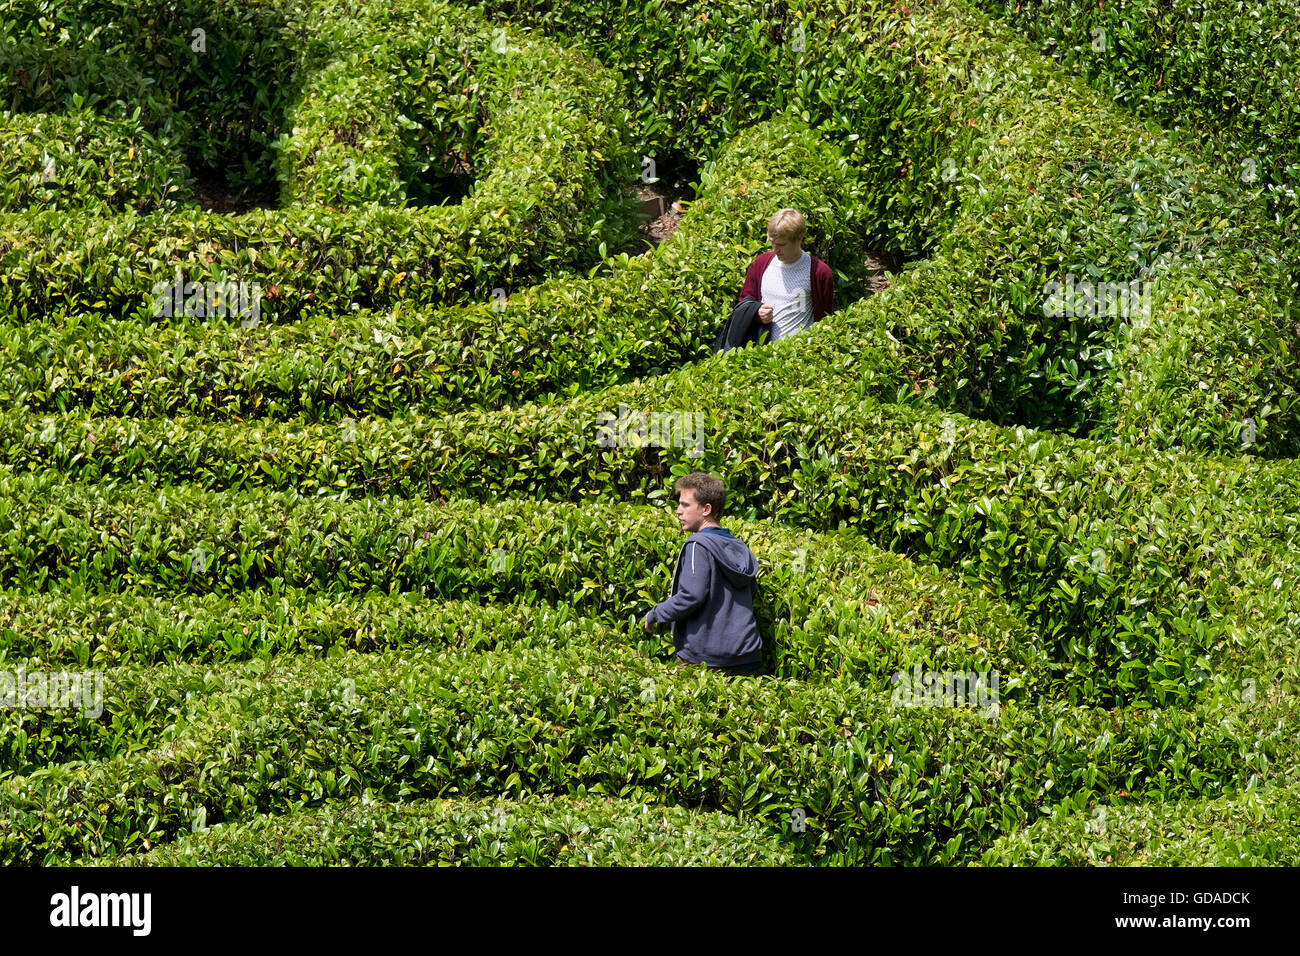 People lost in a Cherry Laurel maze Prunus laurocerasus. Stock Photo